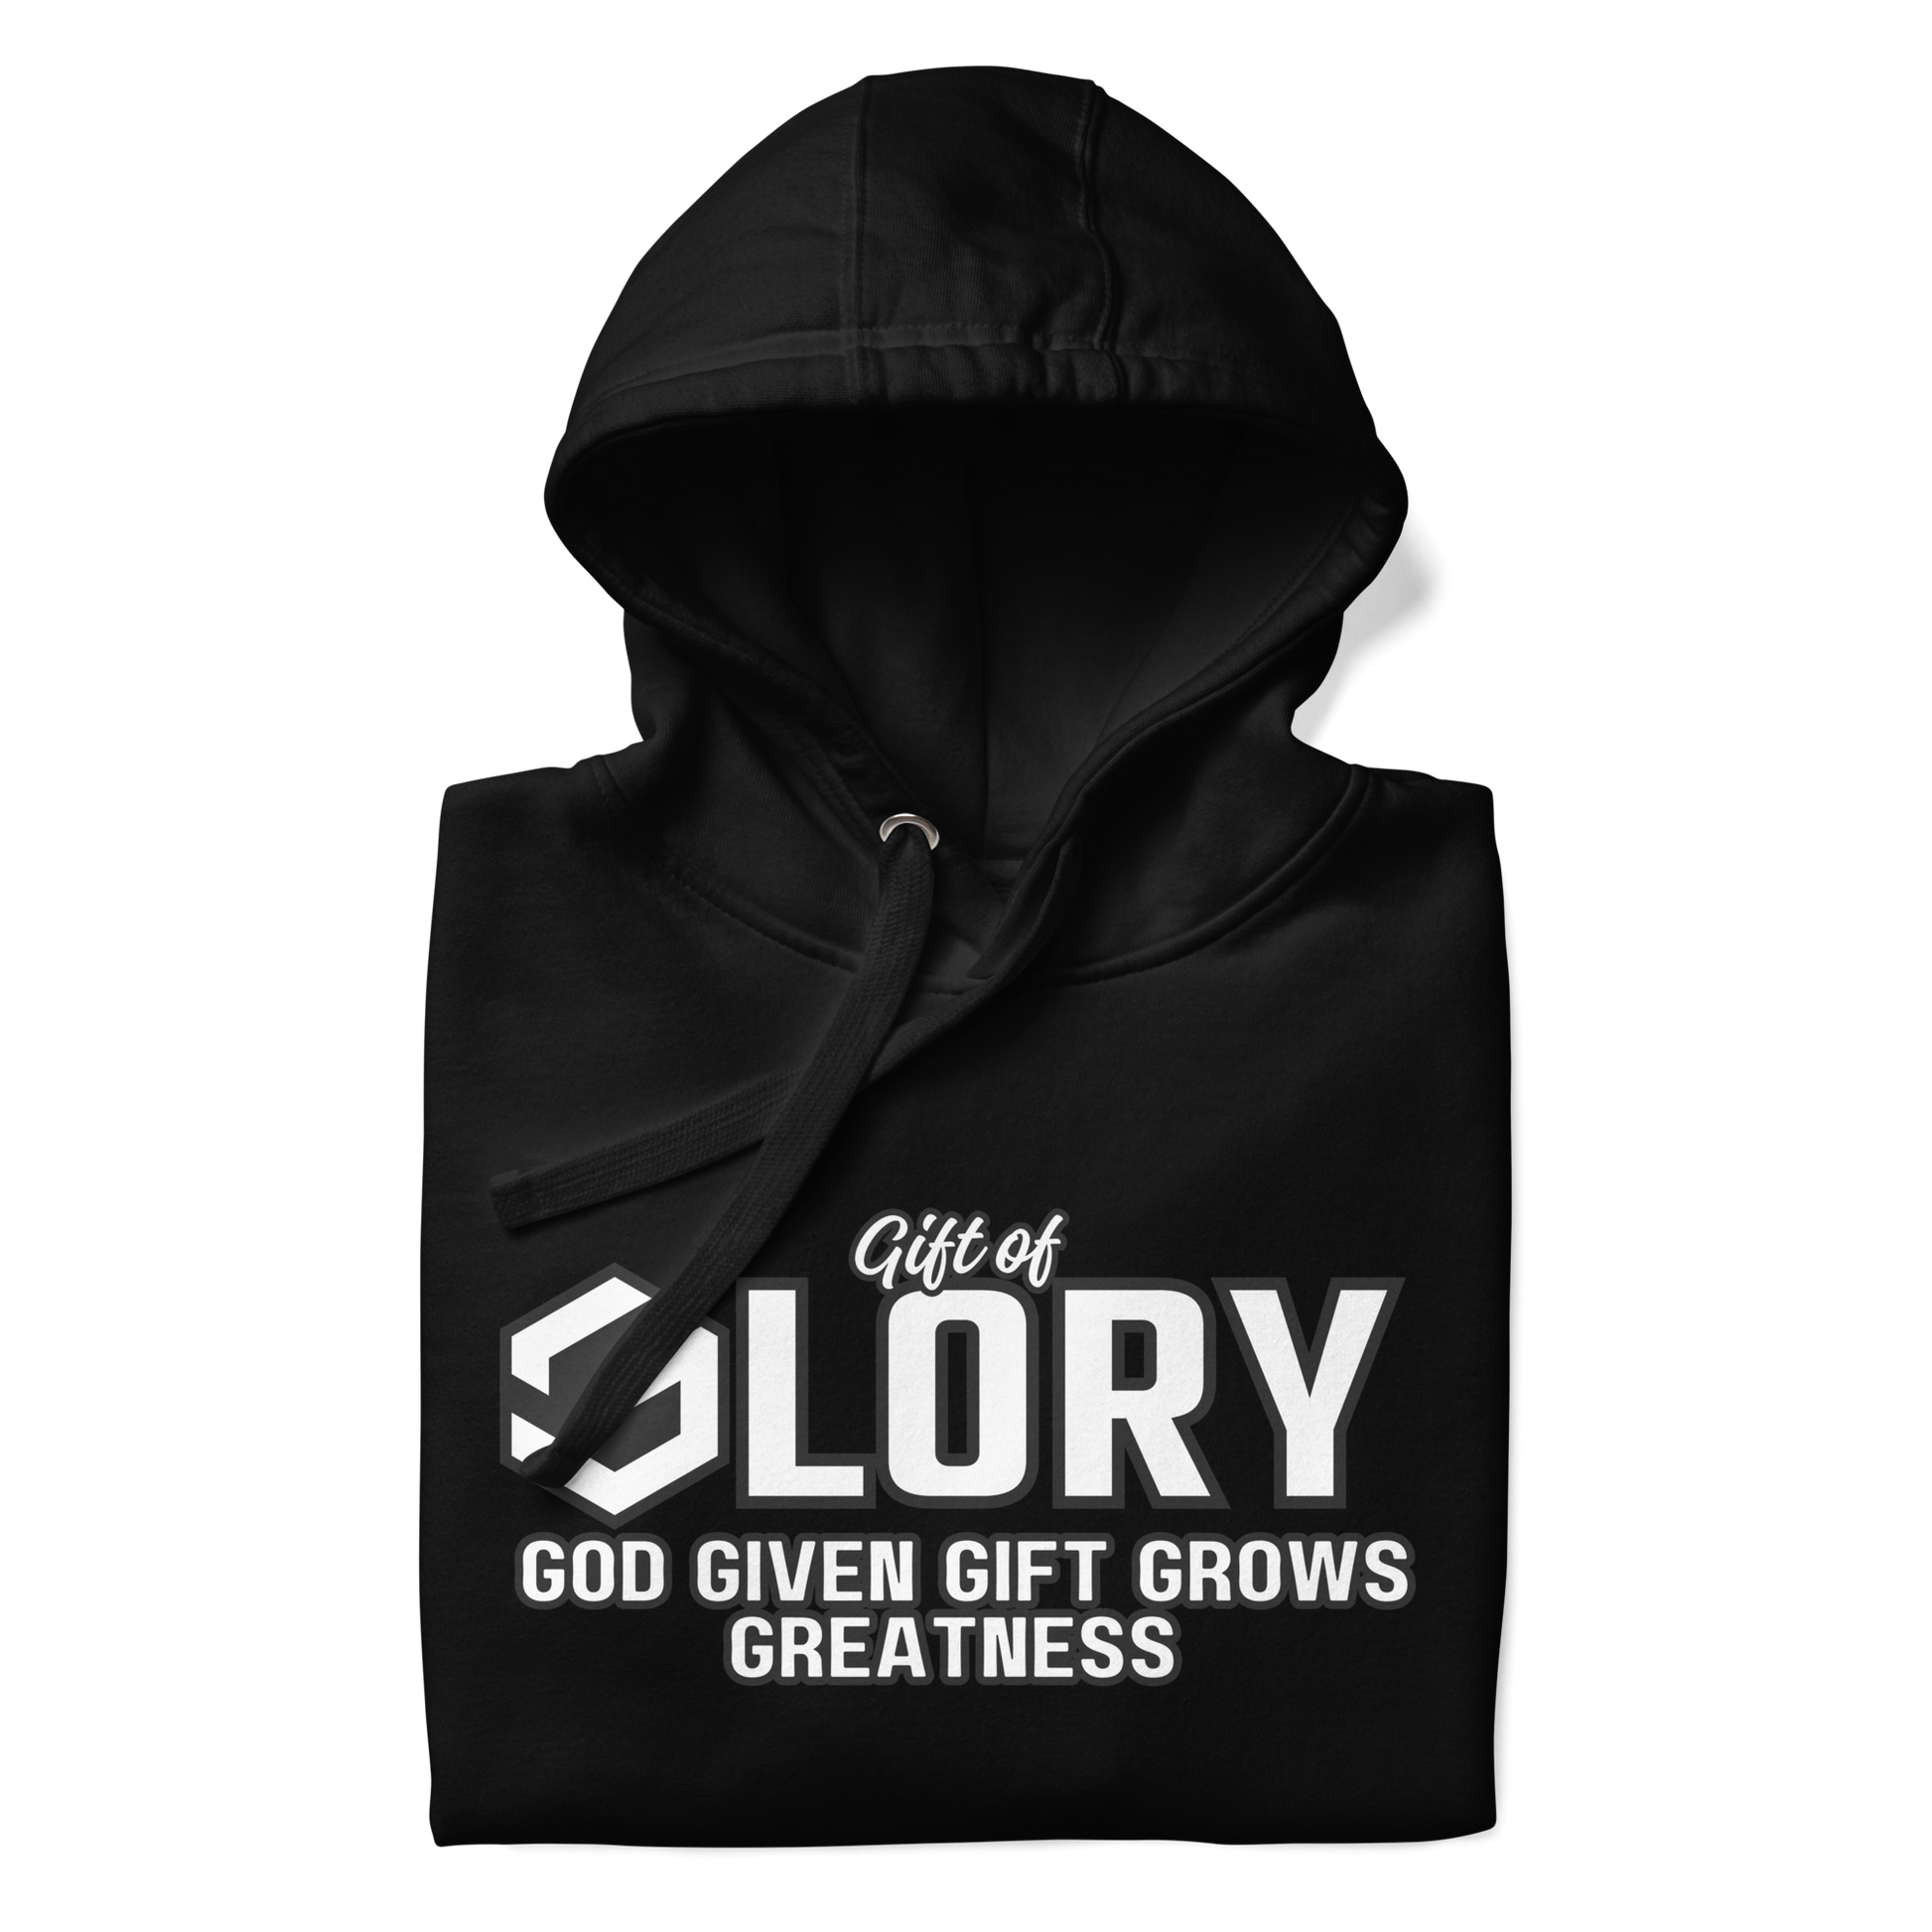 Salvation Jogger Set - Gift of Glory